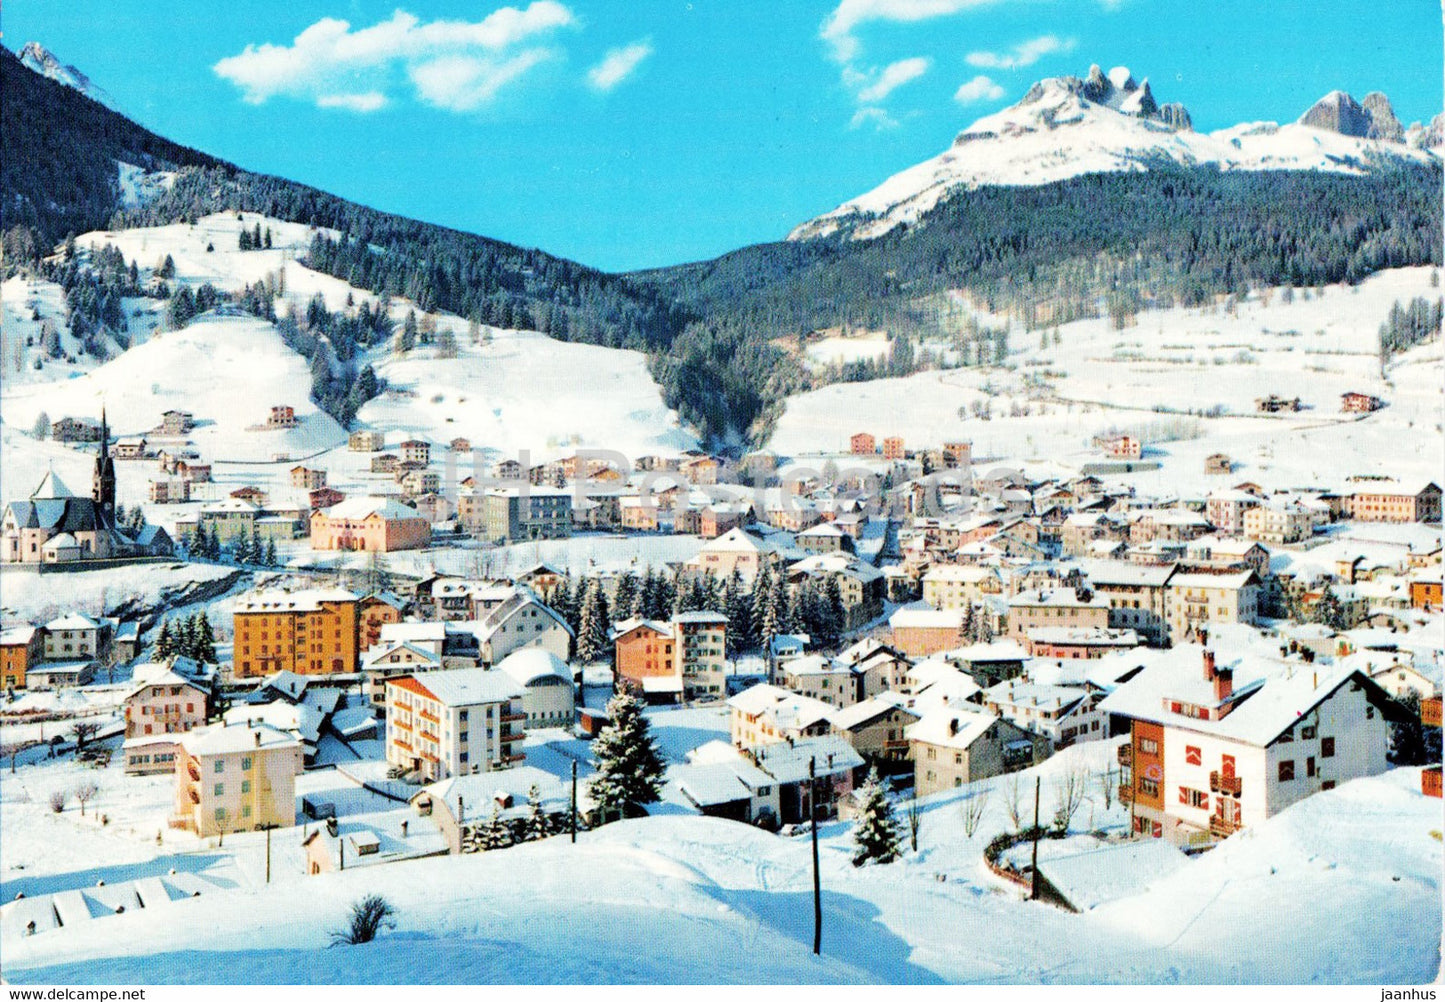 Moena 1184 m - Panorama - Dolomiti - Trentino - Italy - unused - JH Postcards